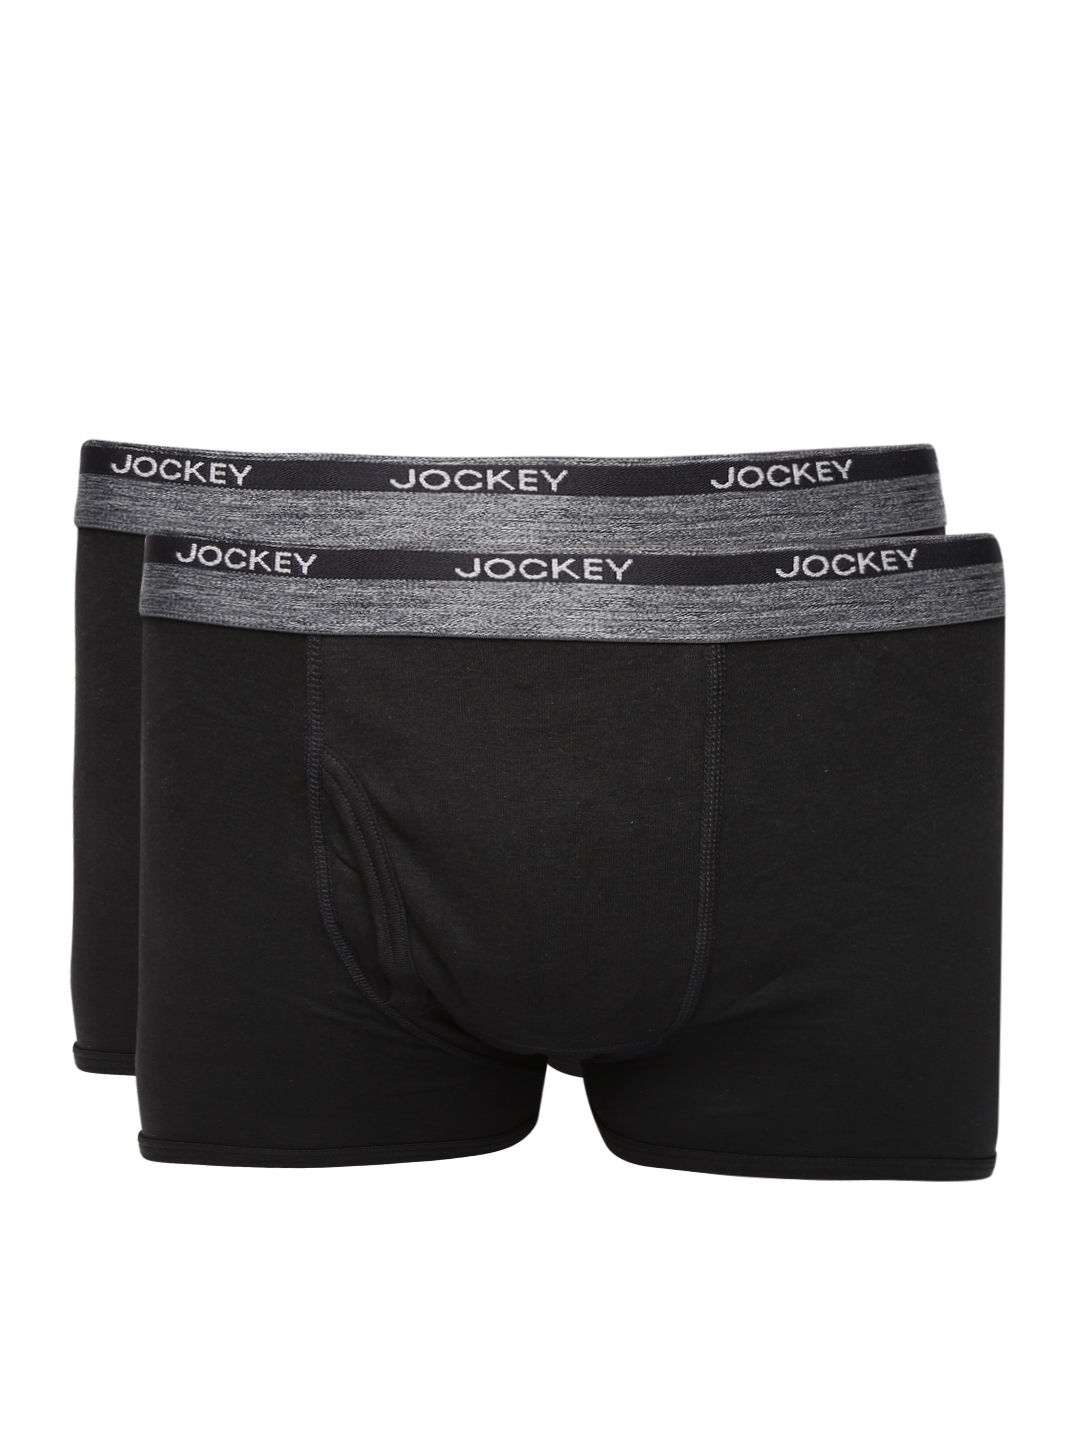 Jockey Modern Classic Underwear | peacecommission.kdsg.gov.ng